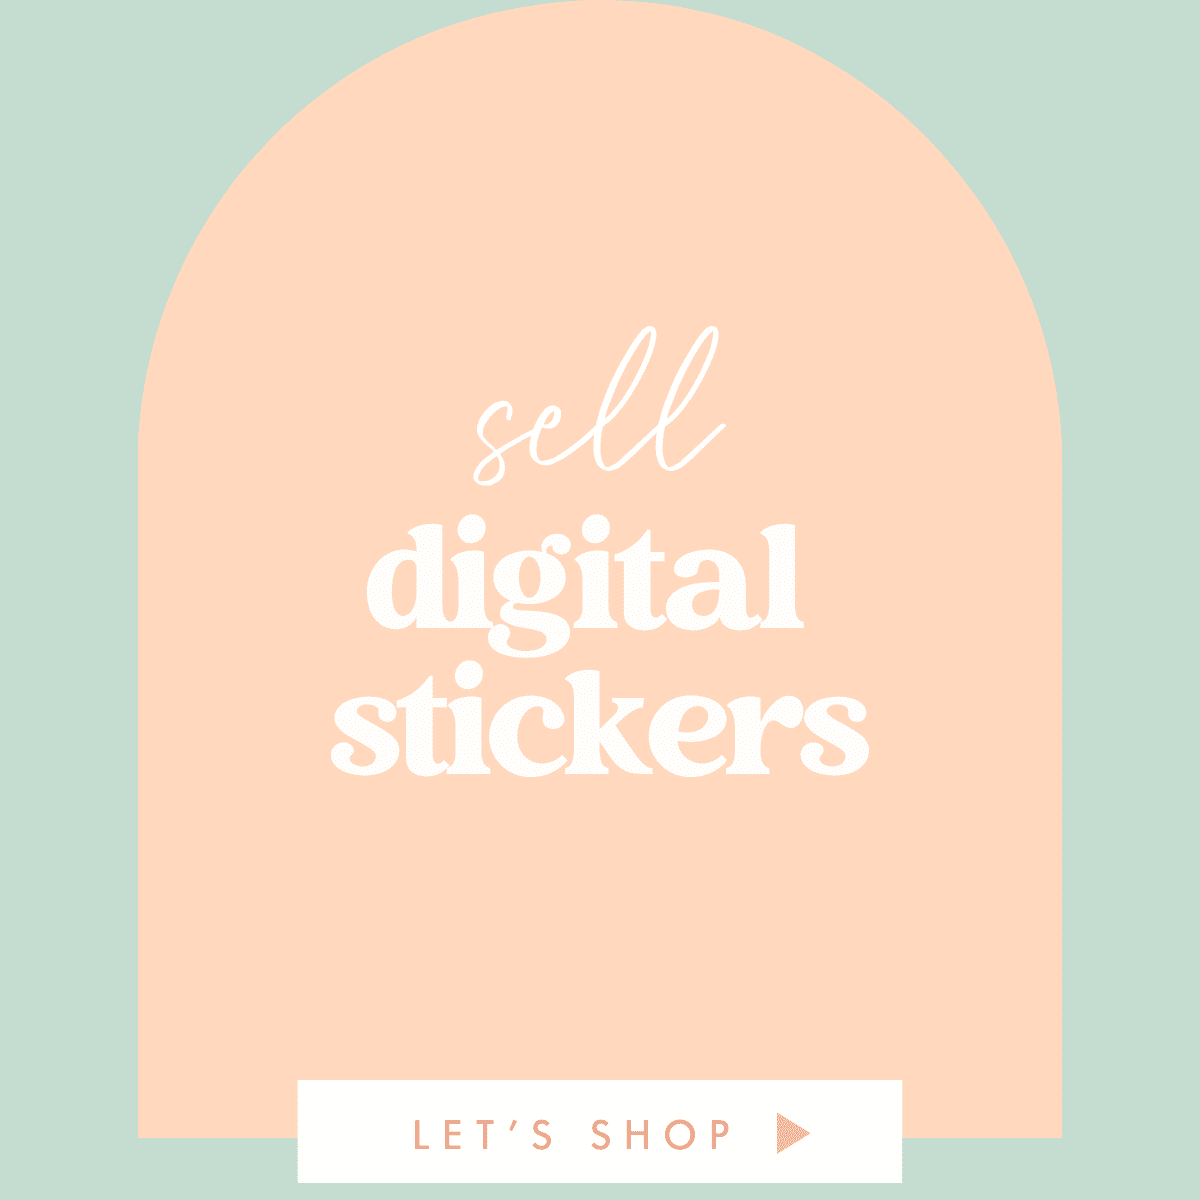 Digital Sticker Products